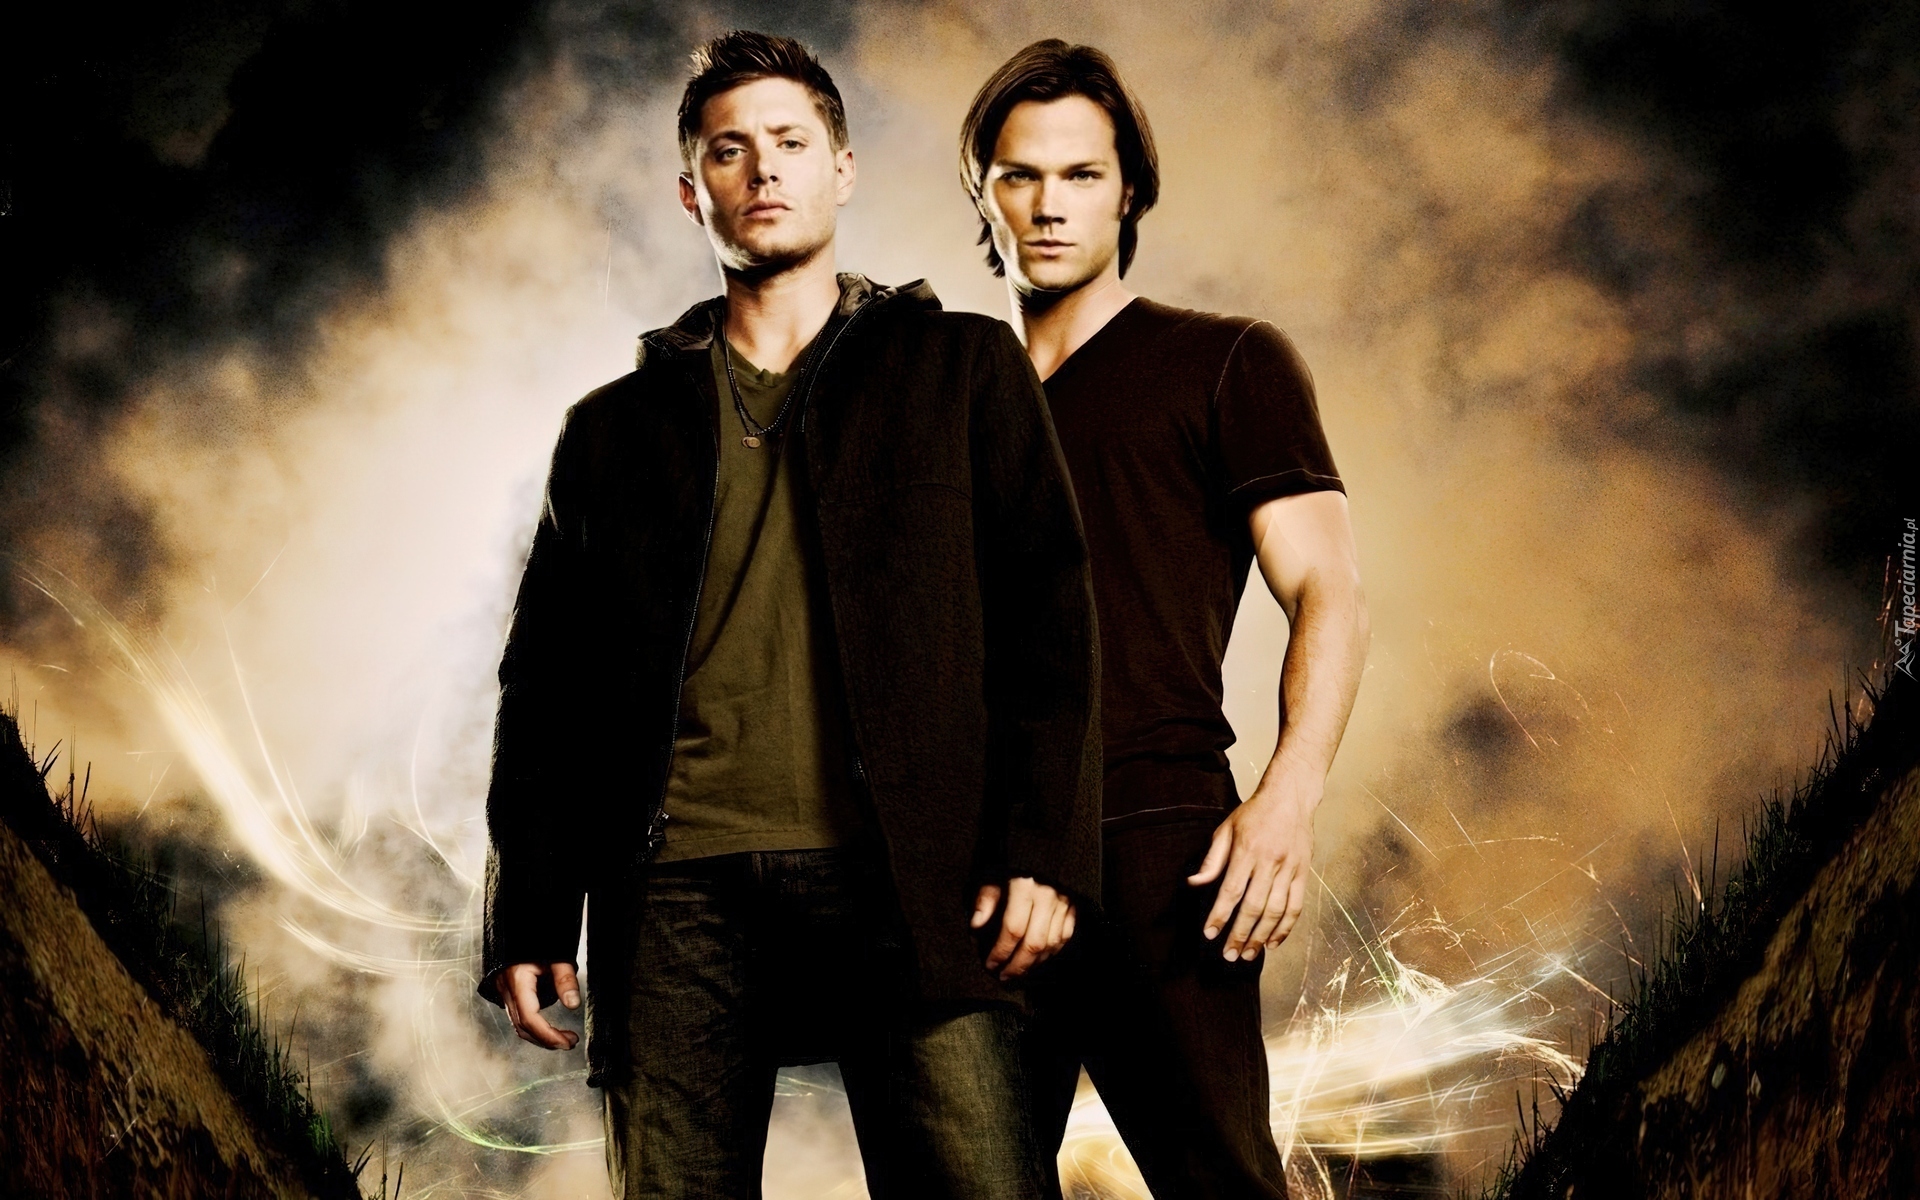 Supernatural, Nie z tego świata, Jensen Ackles, Jared Padalecki